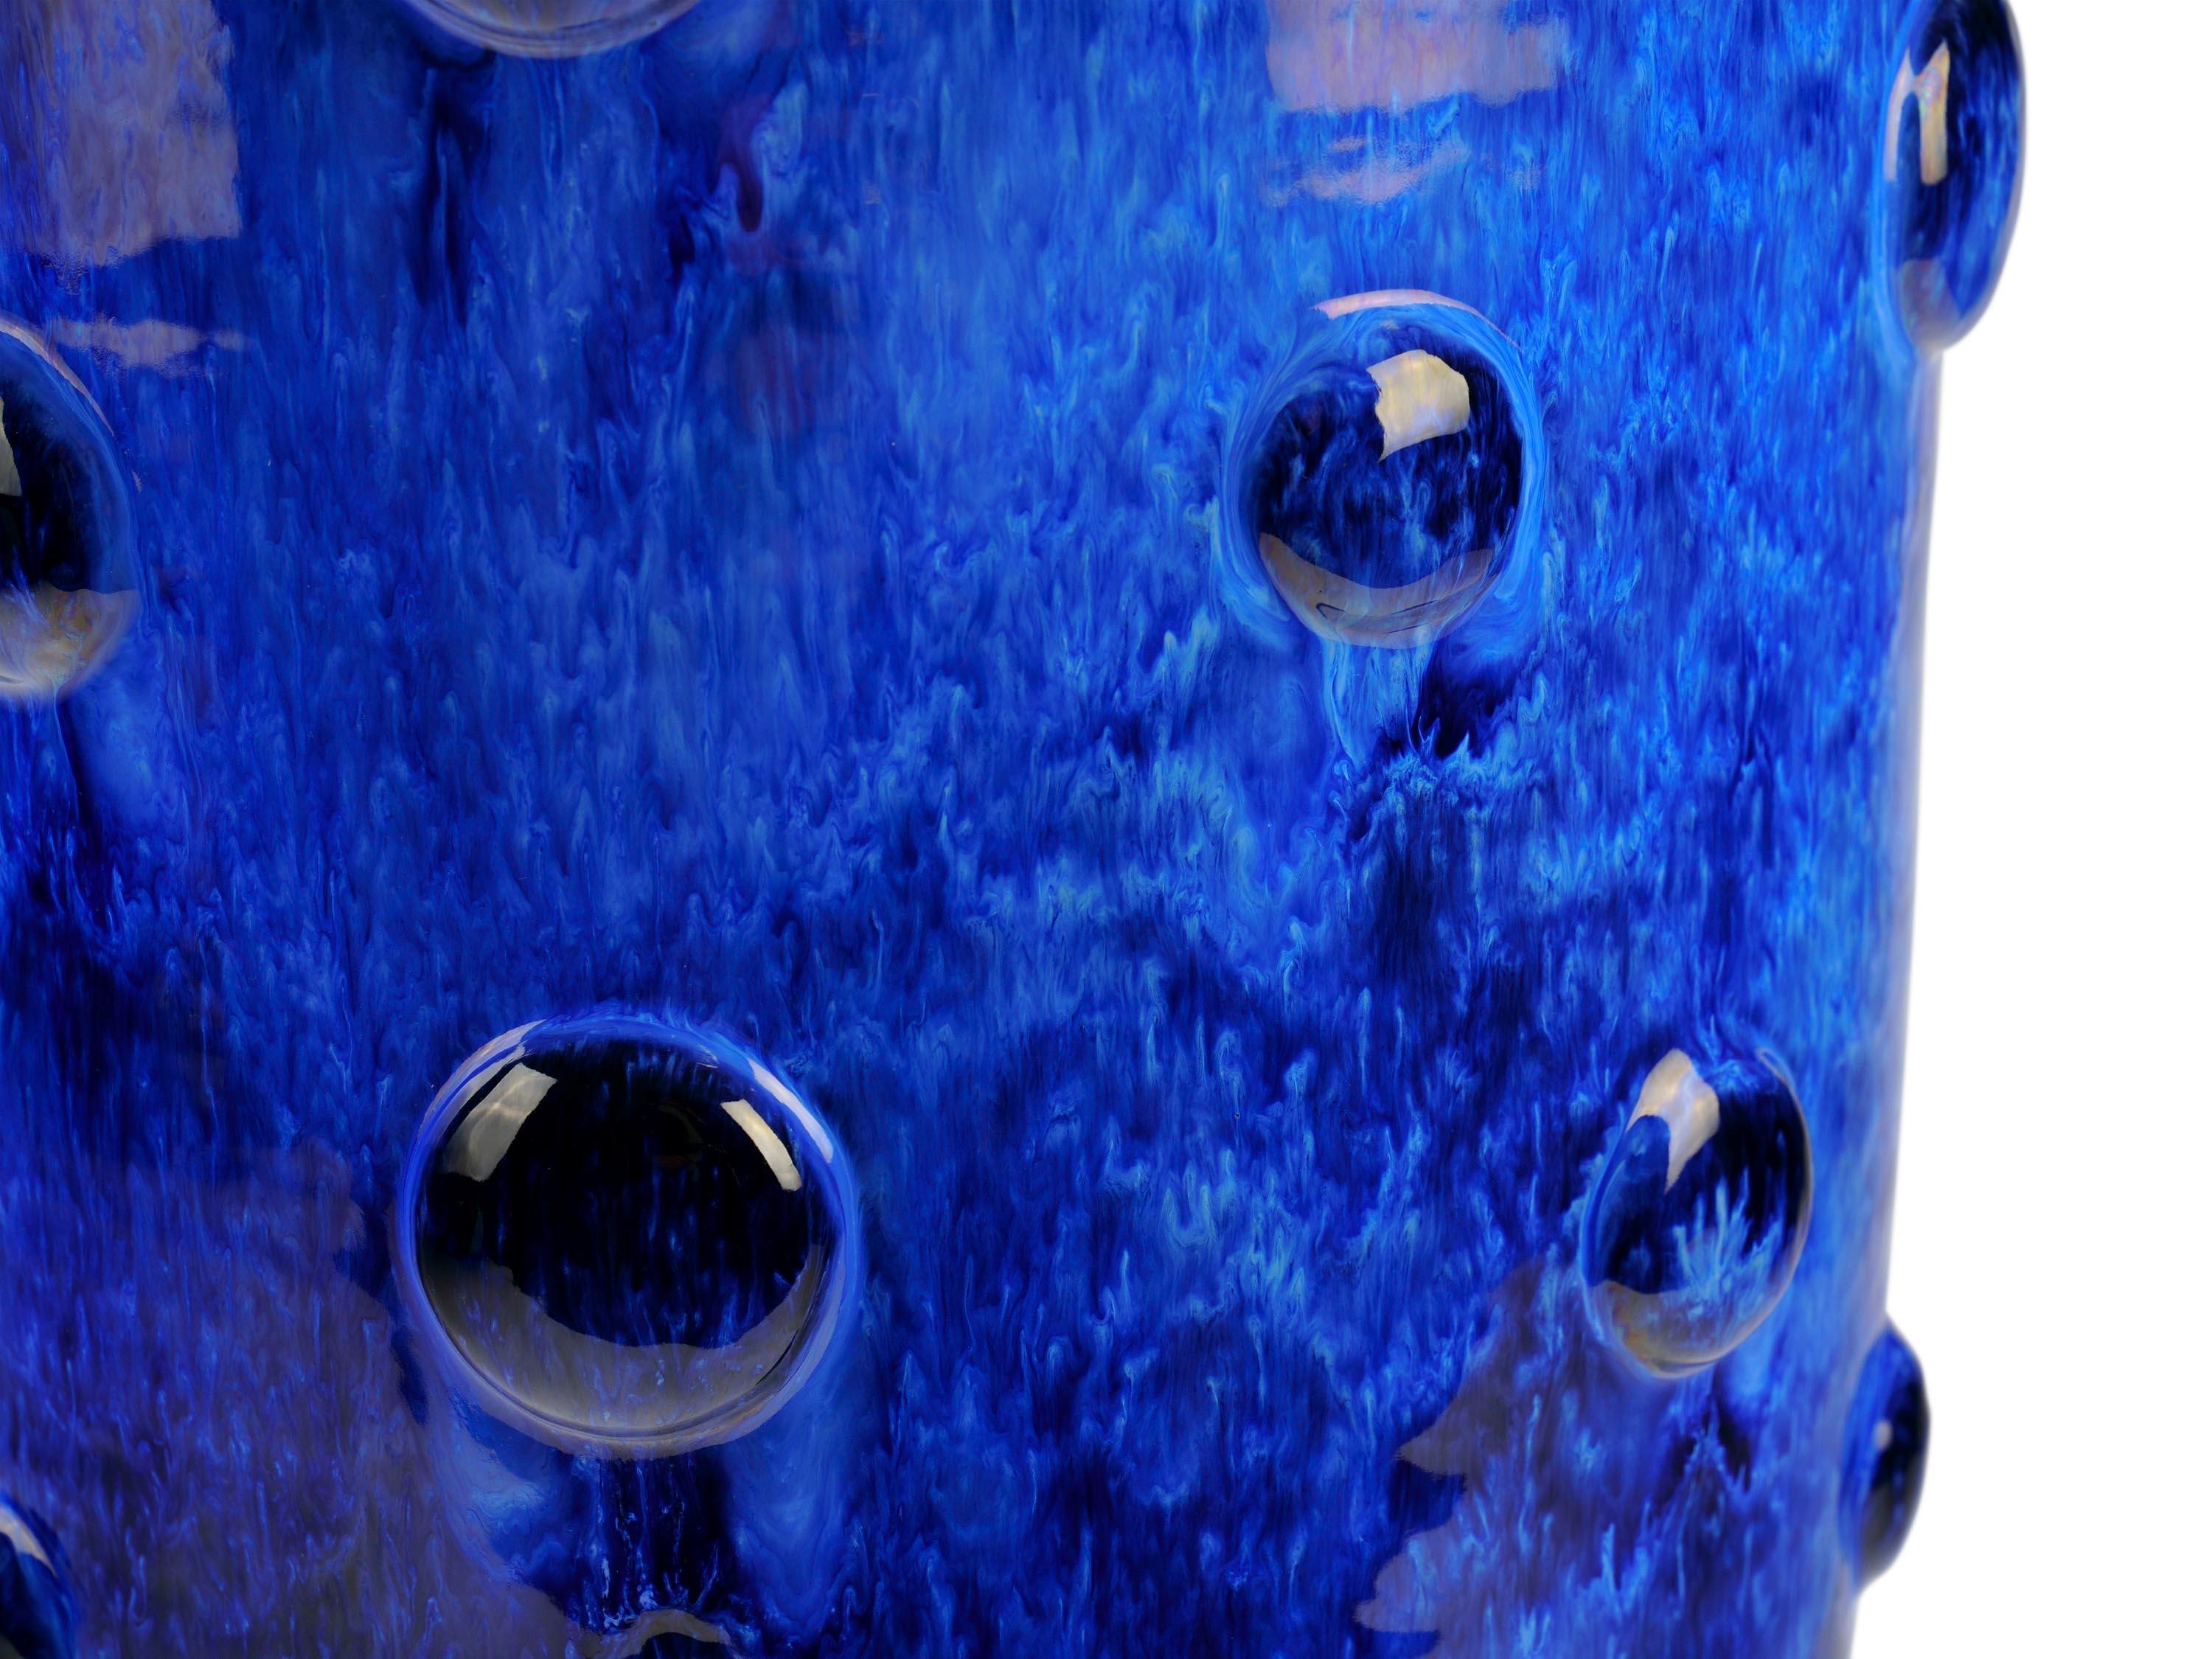 Cobalt Blue Majolica Vase Vessel Ceramic Centerpiece Sculpture Handmade, Italy For Sale 1